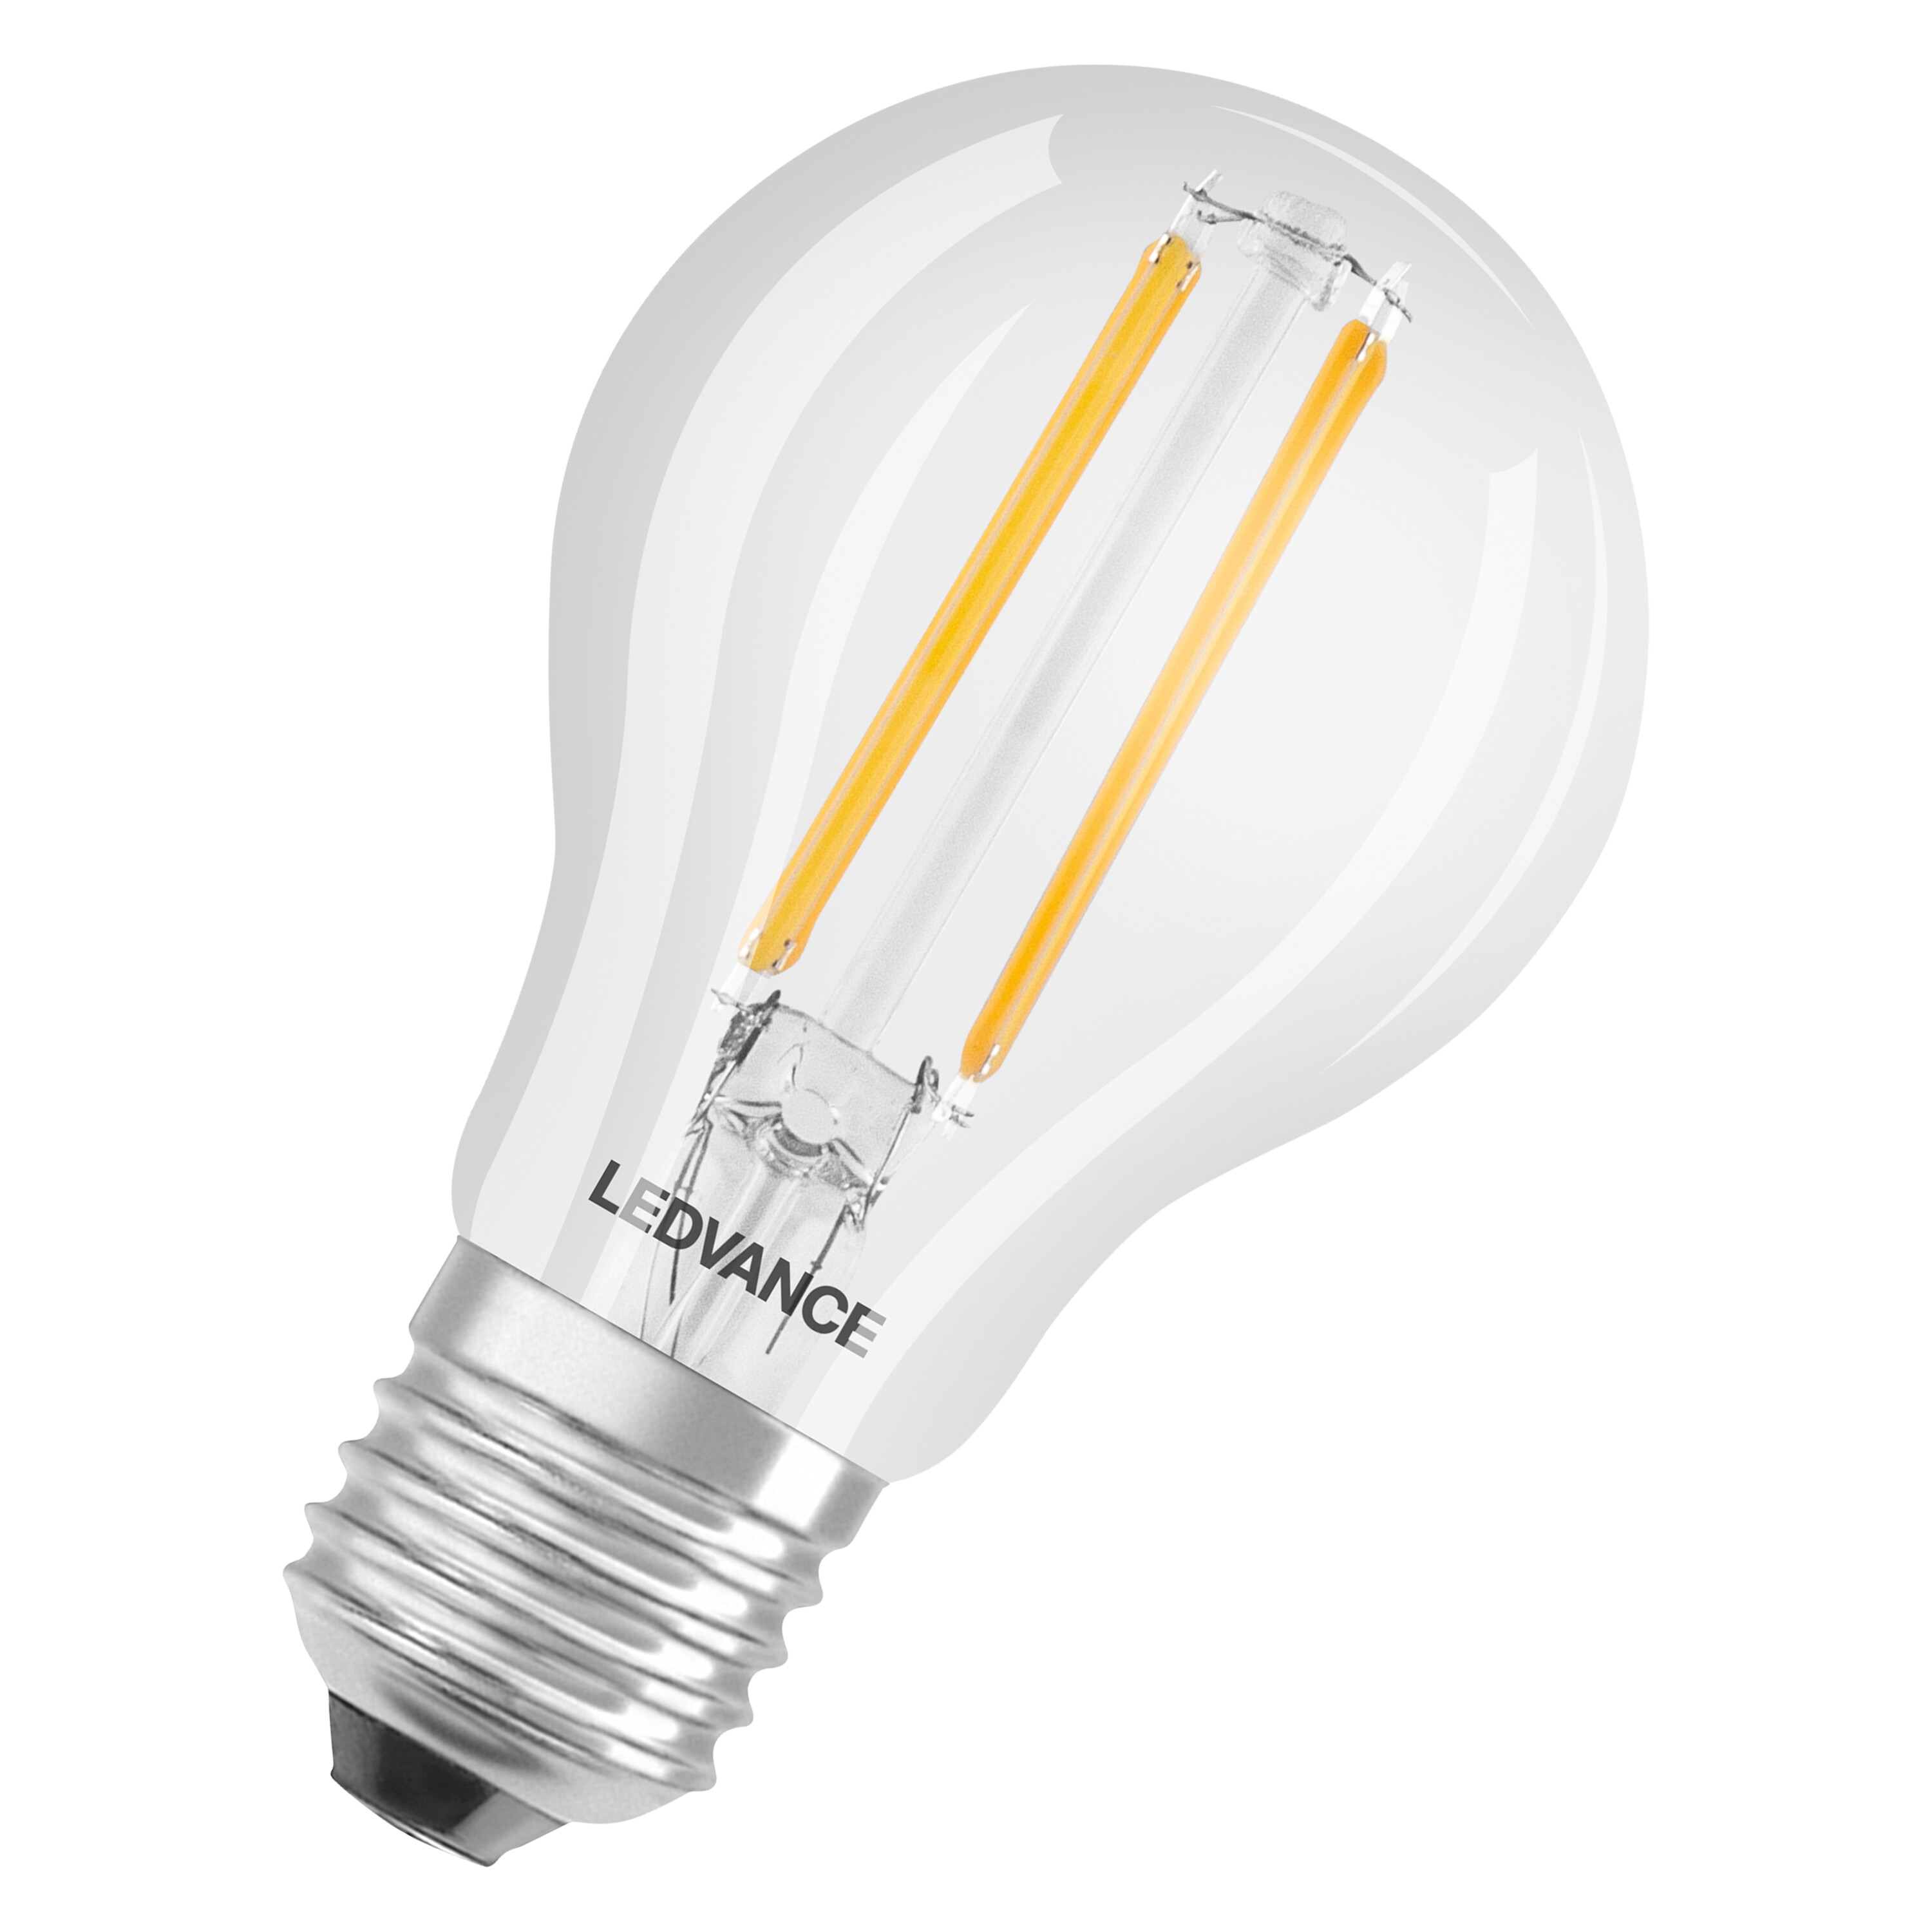 LEDVANCE SMART+ Filament Classic Dimmable LED Warmweiß Lampe